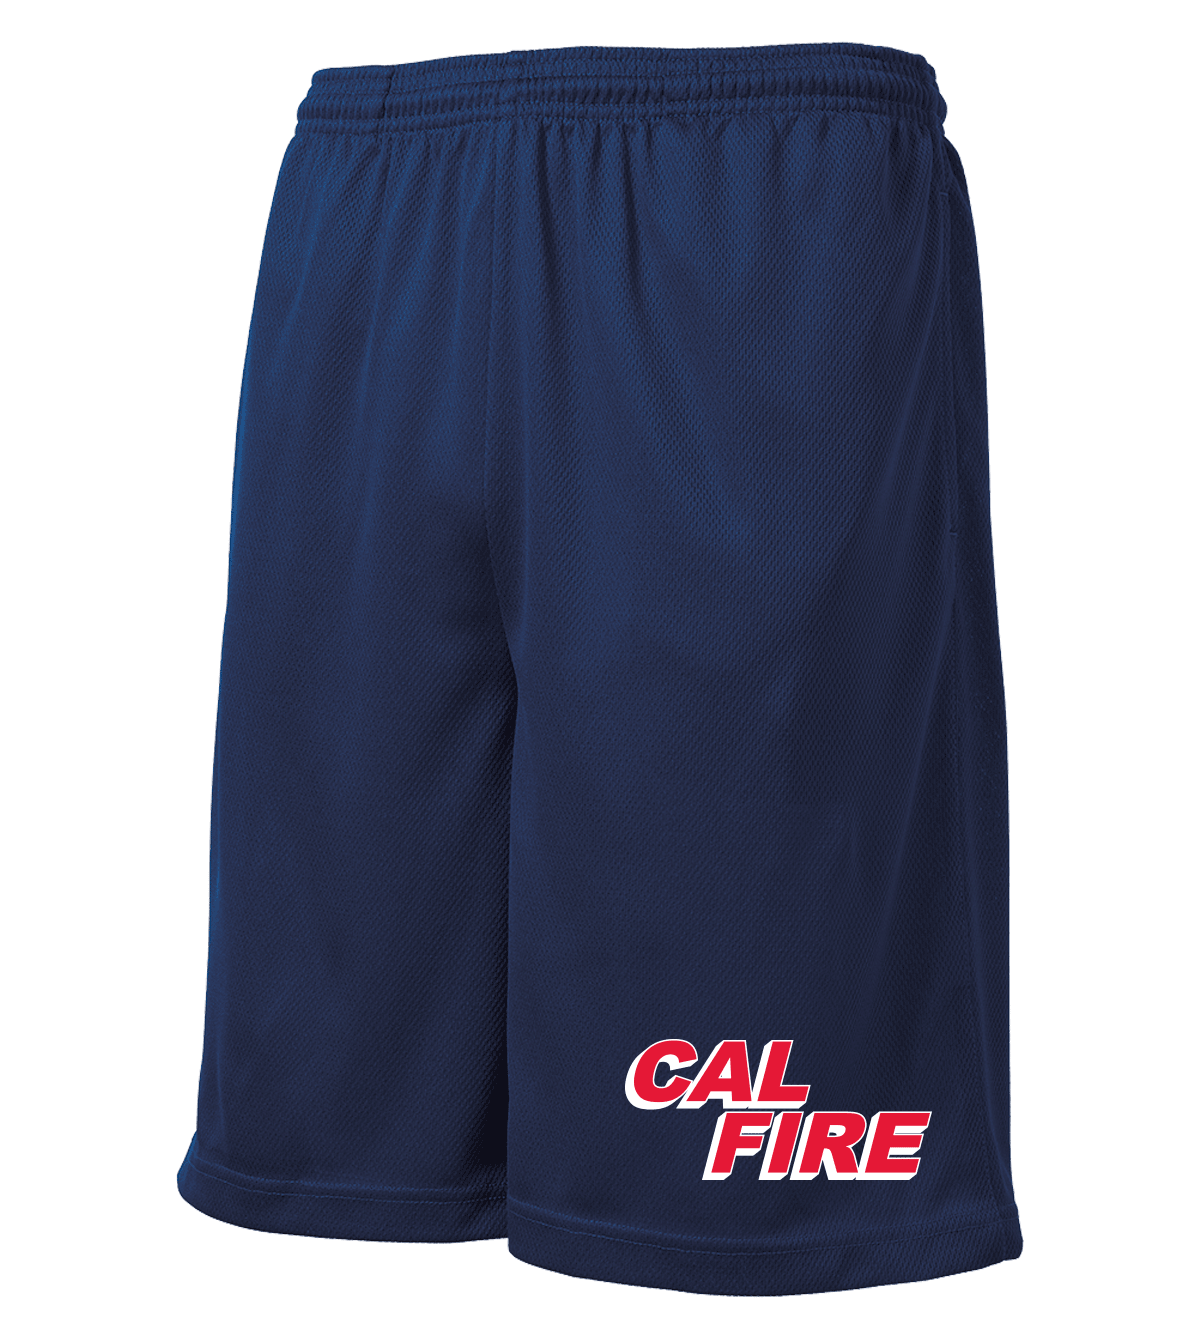 CAL FIRE Mesh Shorts